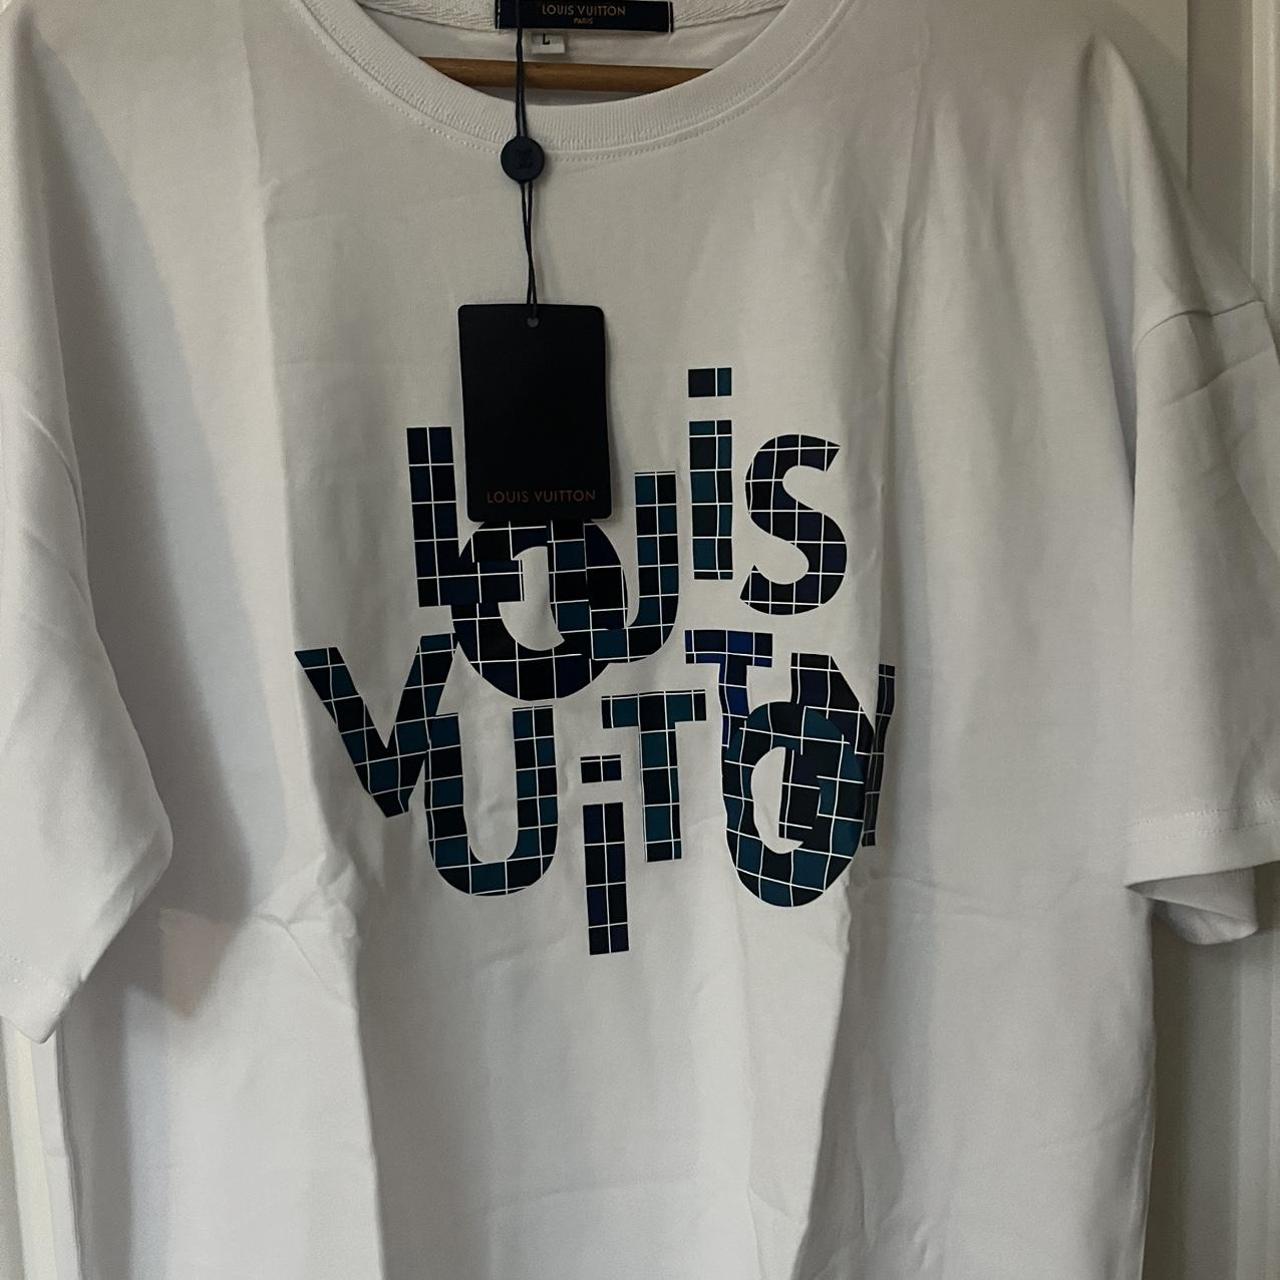 AW18 Louis Vuitton 'Peace & Love' Black Graphic T-Shirt